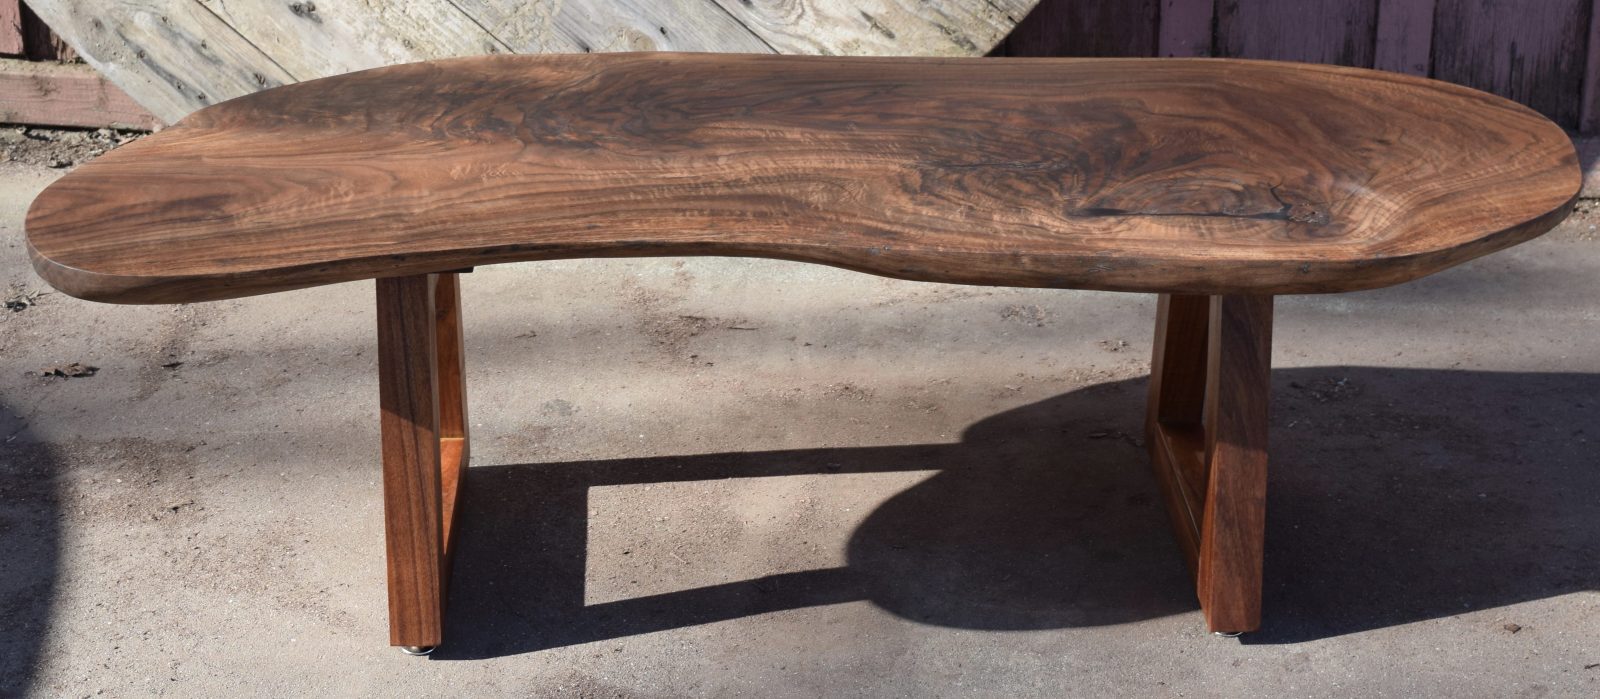 Beautiful Claro Walnut Coffee Table with Handmade Acacia Wood Legs